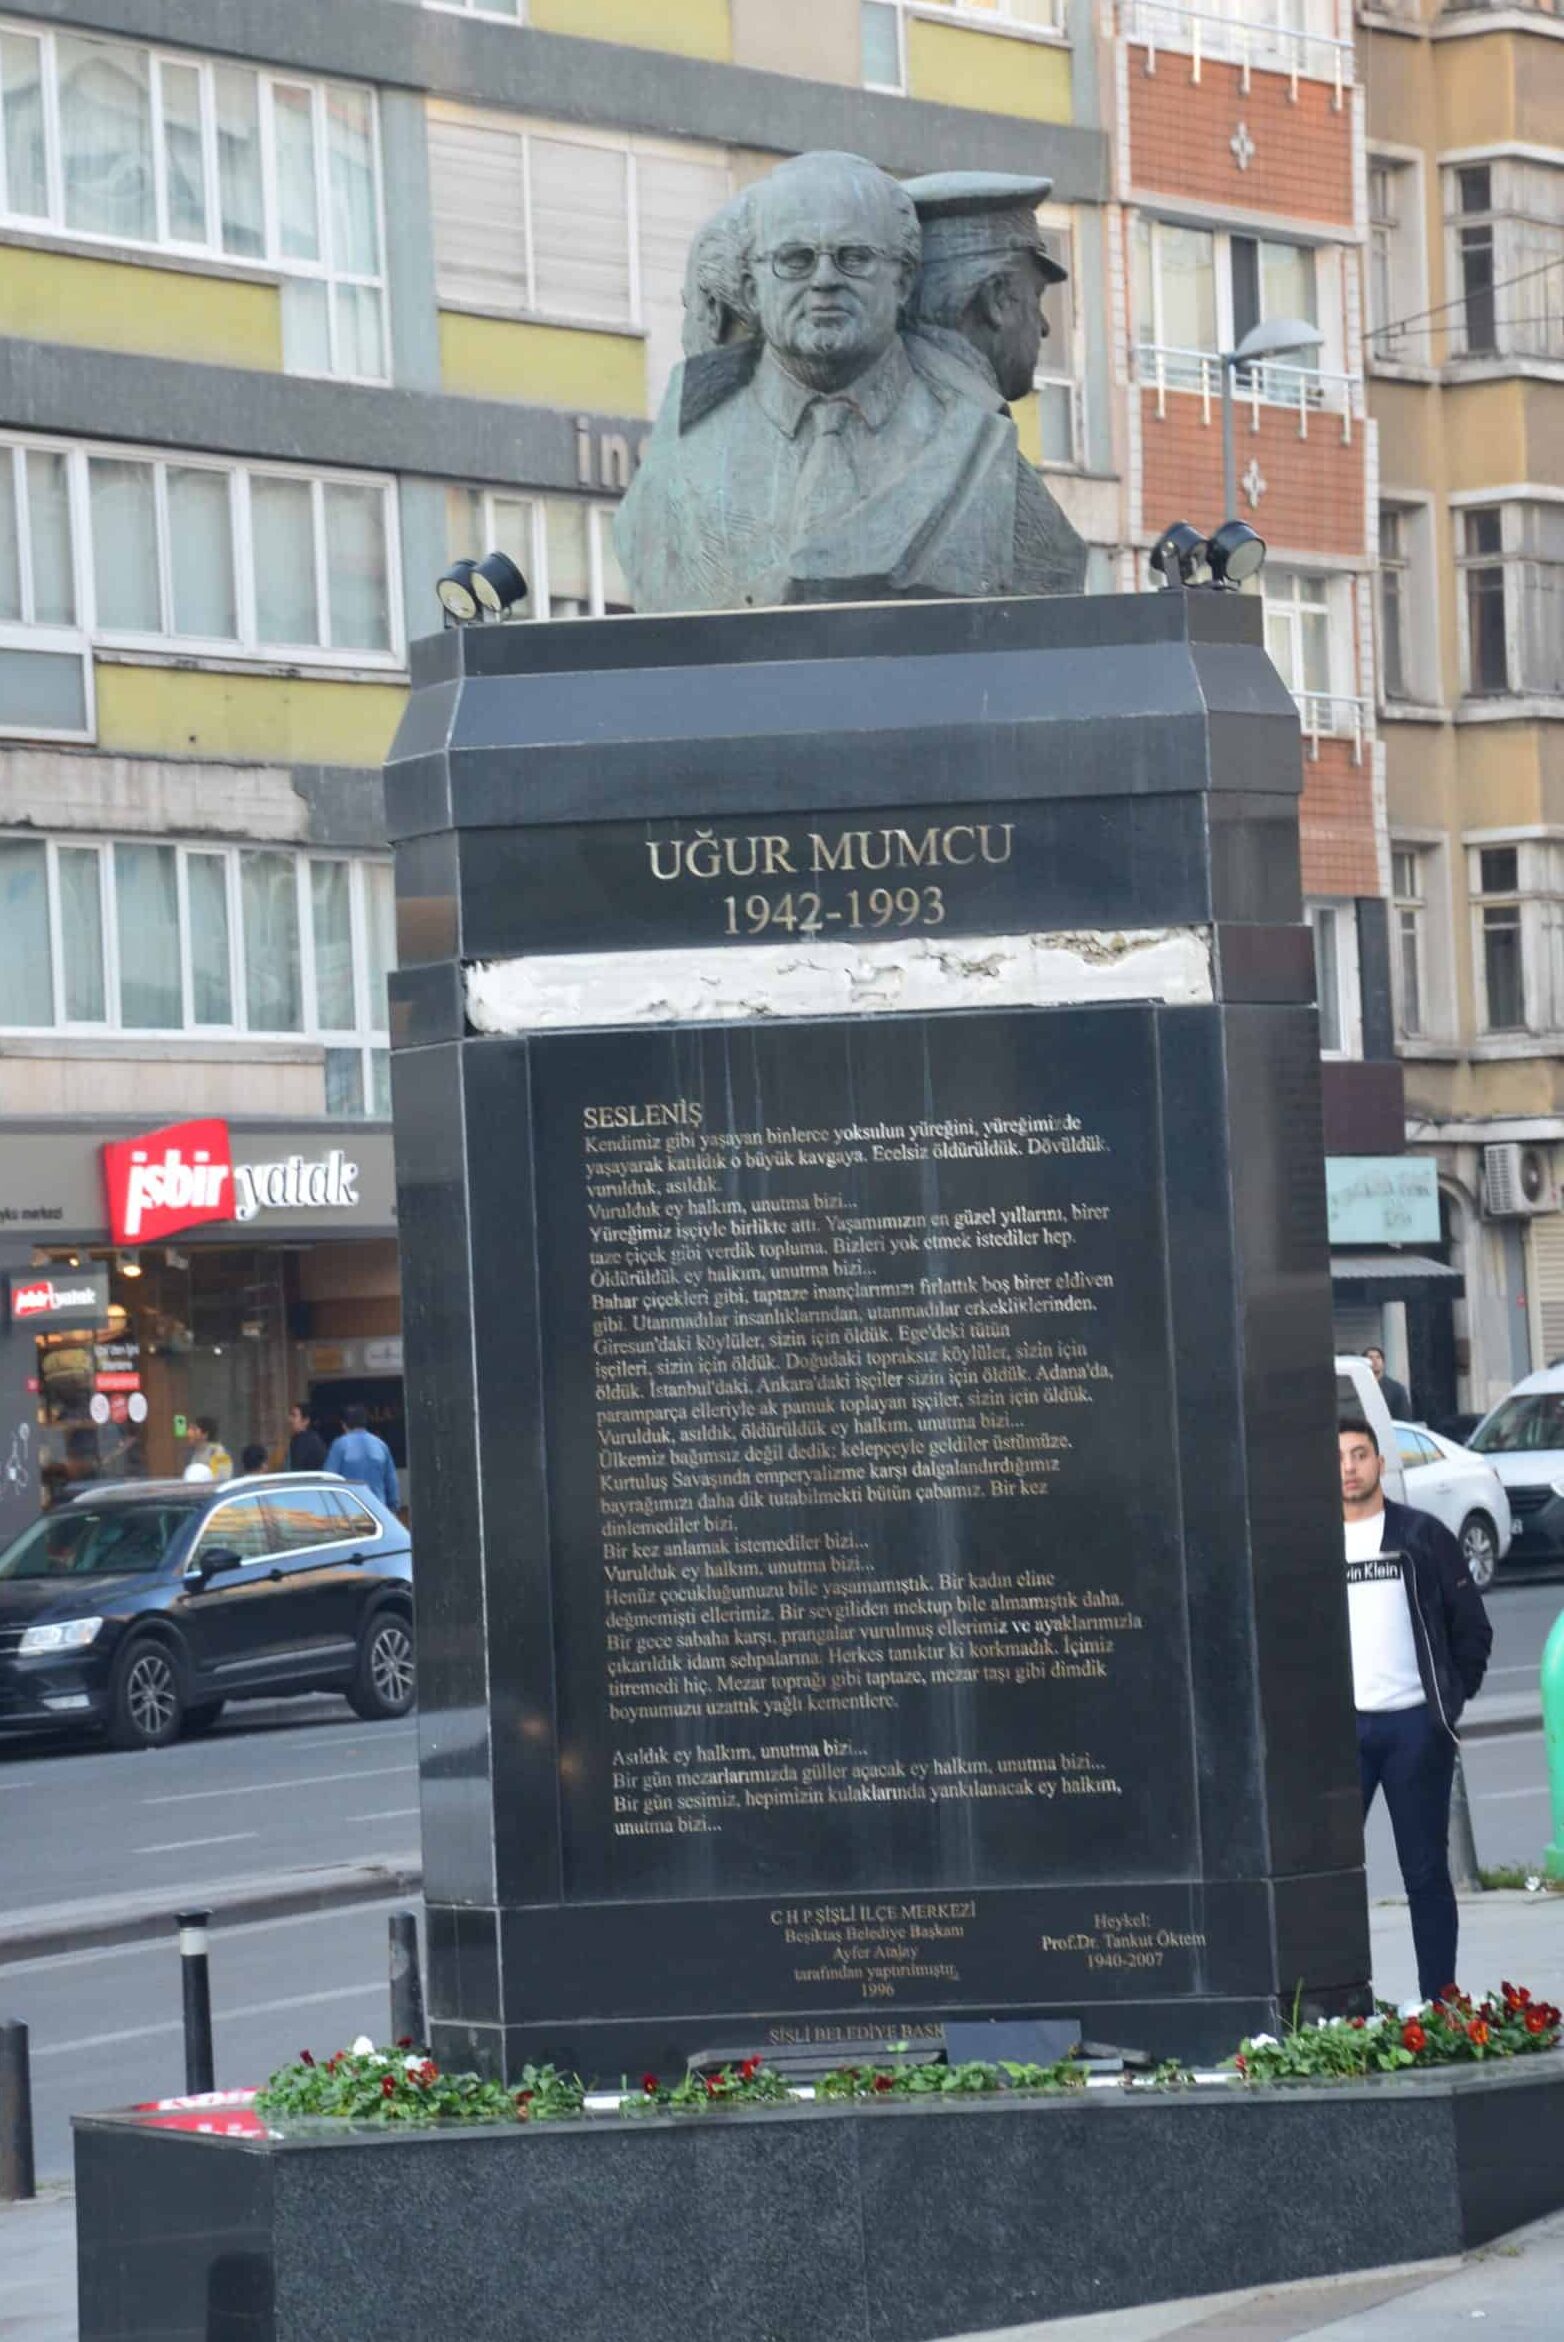 Uğur Mumcu memorial in Osmanbey, Istanbul, Turkey